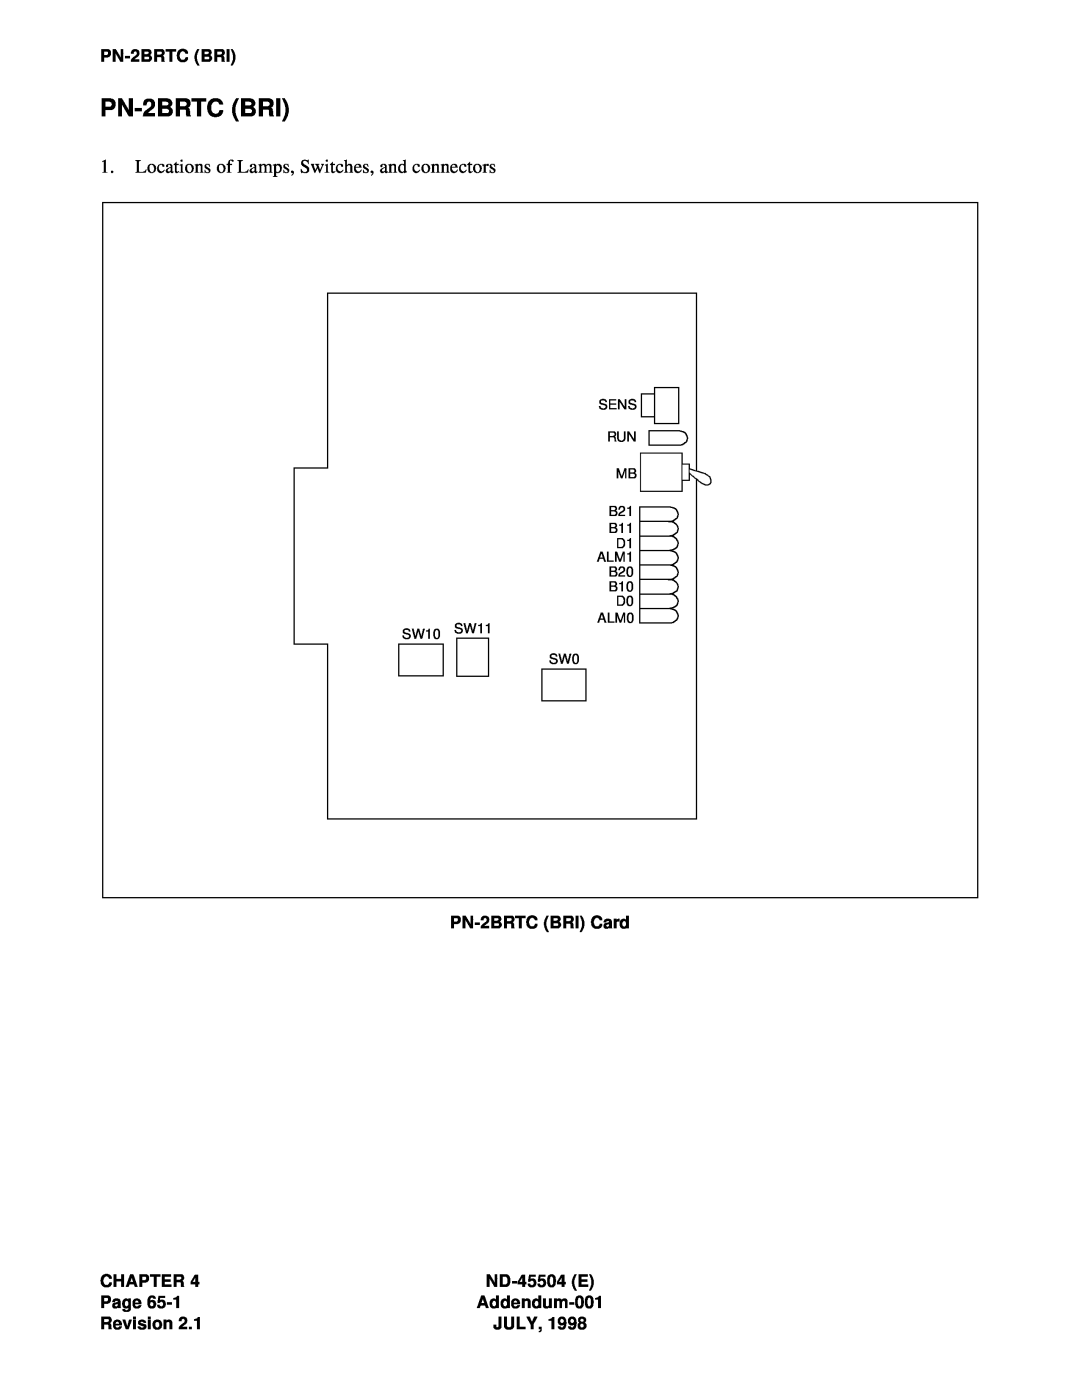 NEC 2000 IVS manual PN-2BRTCBRI, Locations of Lamps, Switches, and connectors 